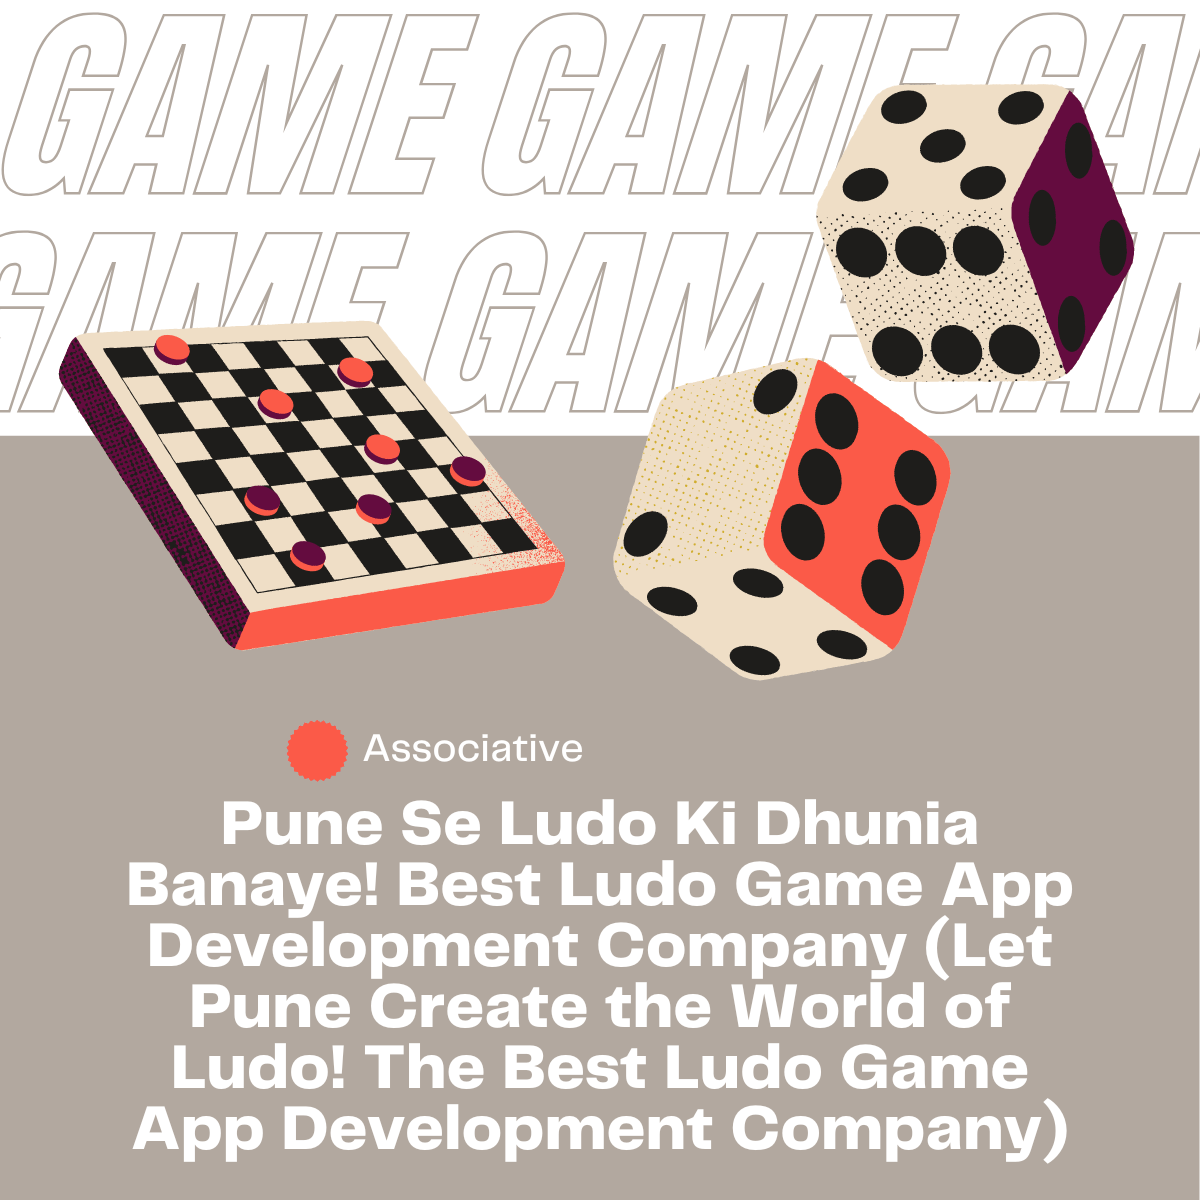 Pune Se Ludo Ki Dhunia Banaye! Best Ludo Game App Development Company (Let Pune Create the World of Ludo! The Best Ludo Game App Development Company)